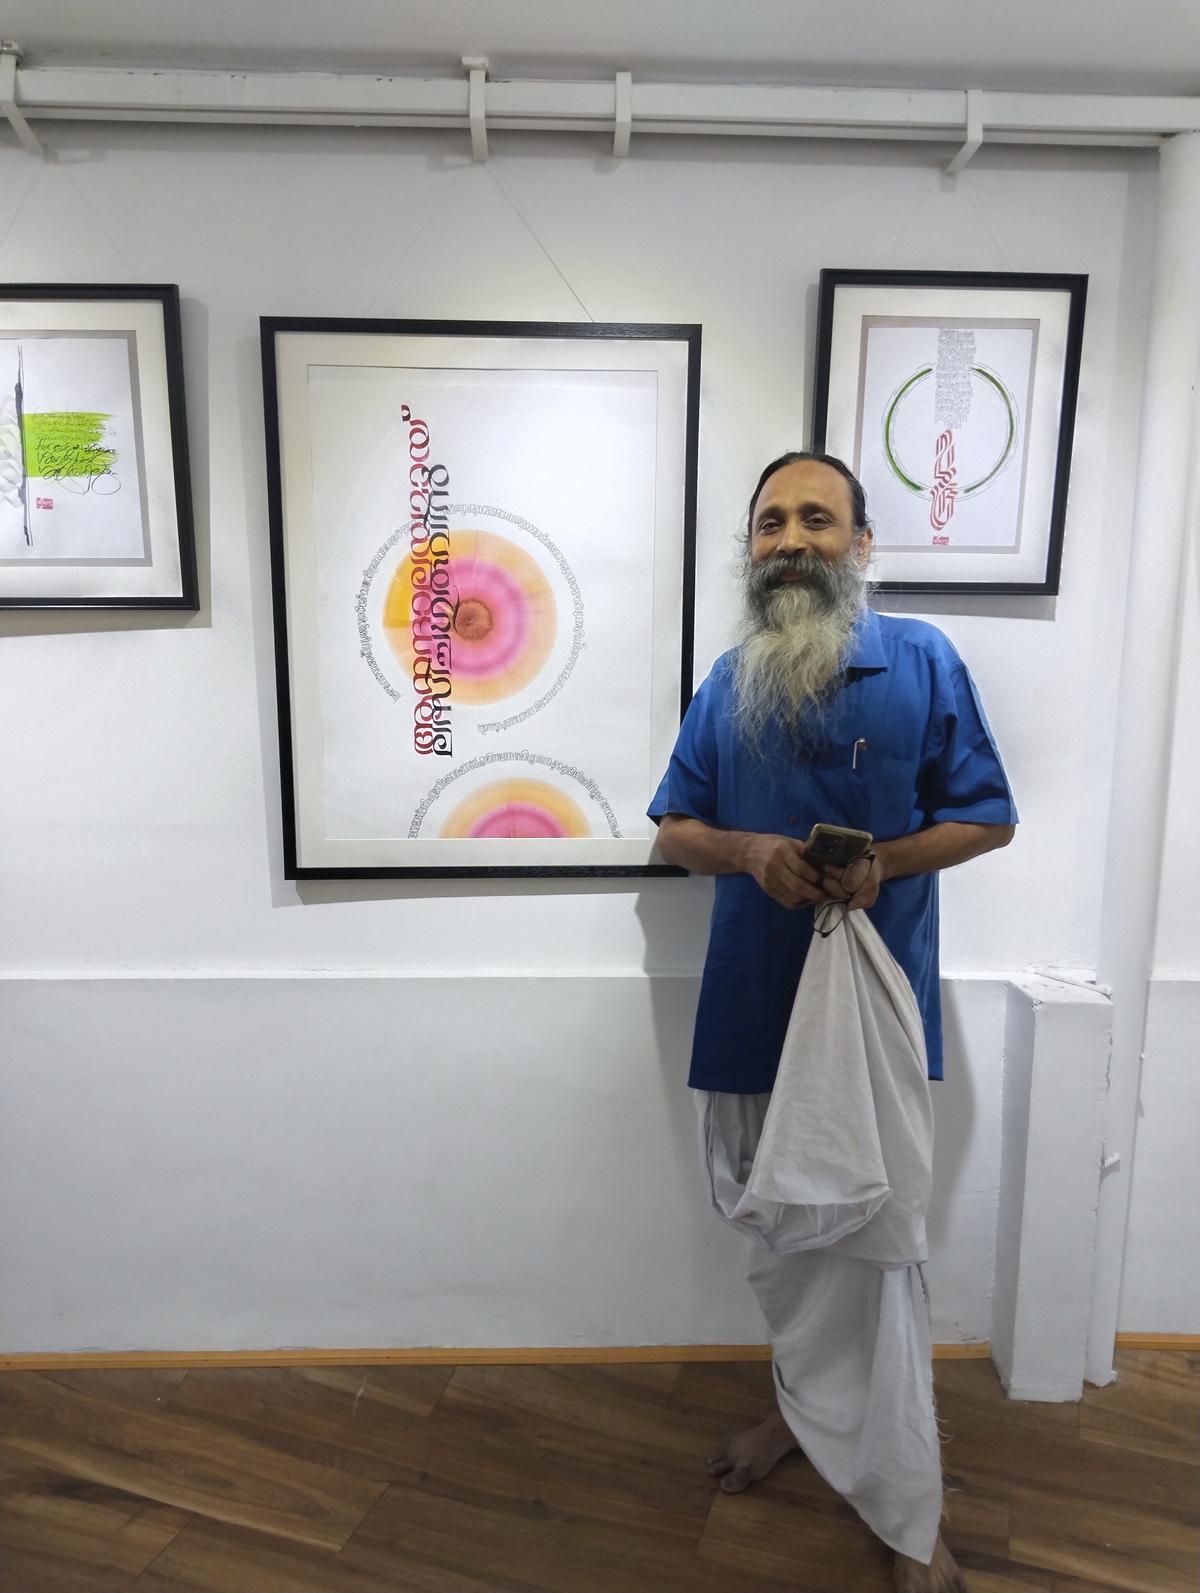 Calligrapher Artist Bhattathiri exhibits works based on Kumaran Asan's poems at Ka Cha Ta Tha Pa, his gallery for Malayalam calligraphy, in Thiruvananthapuram